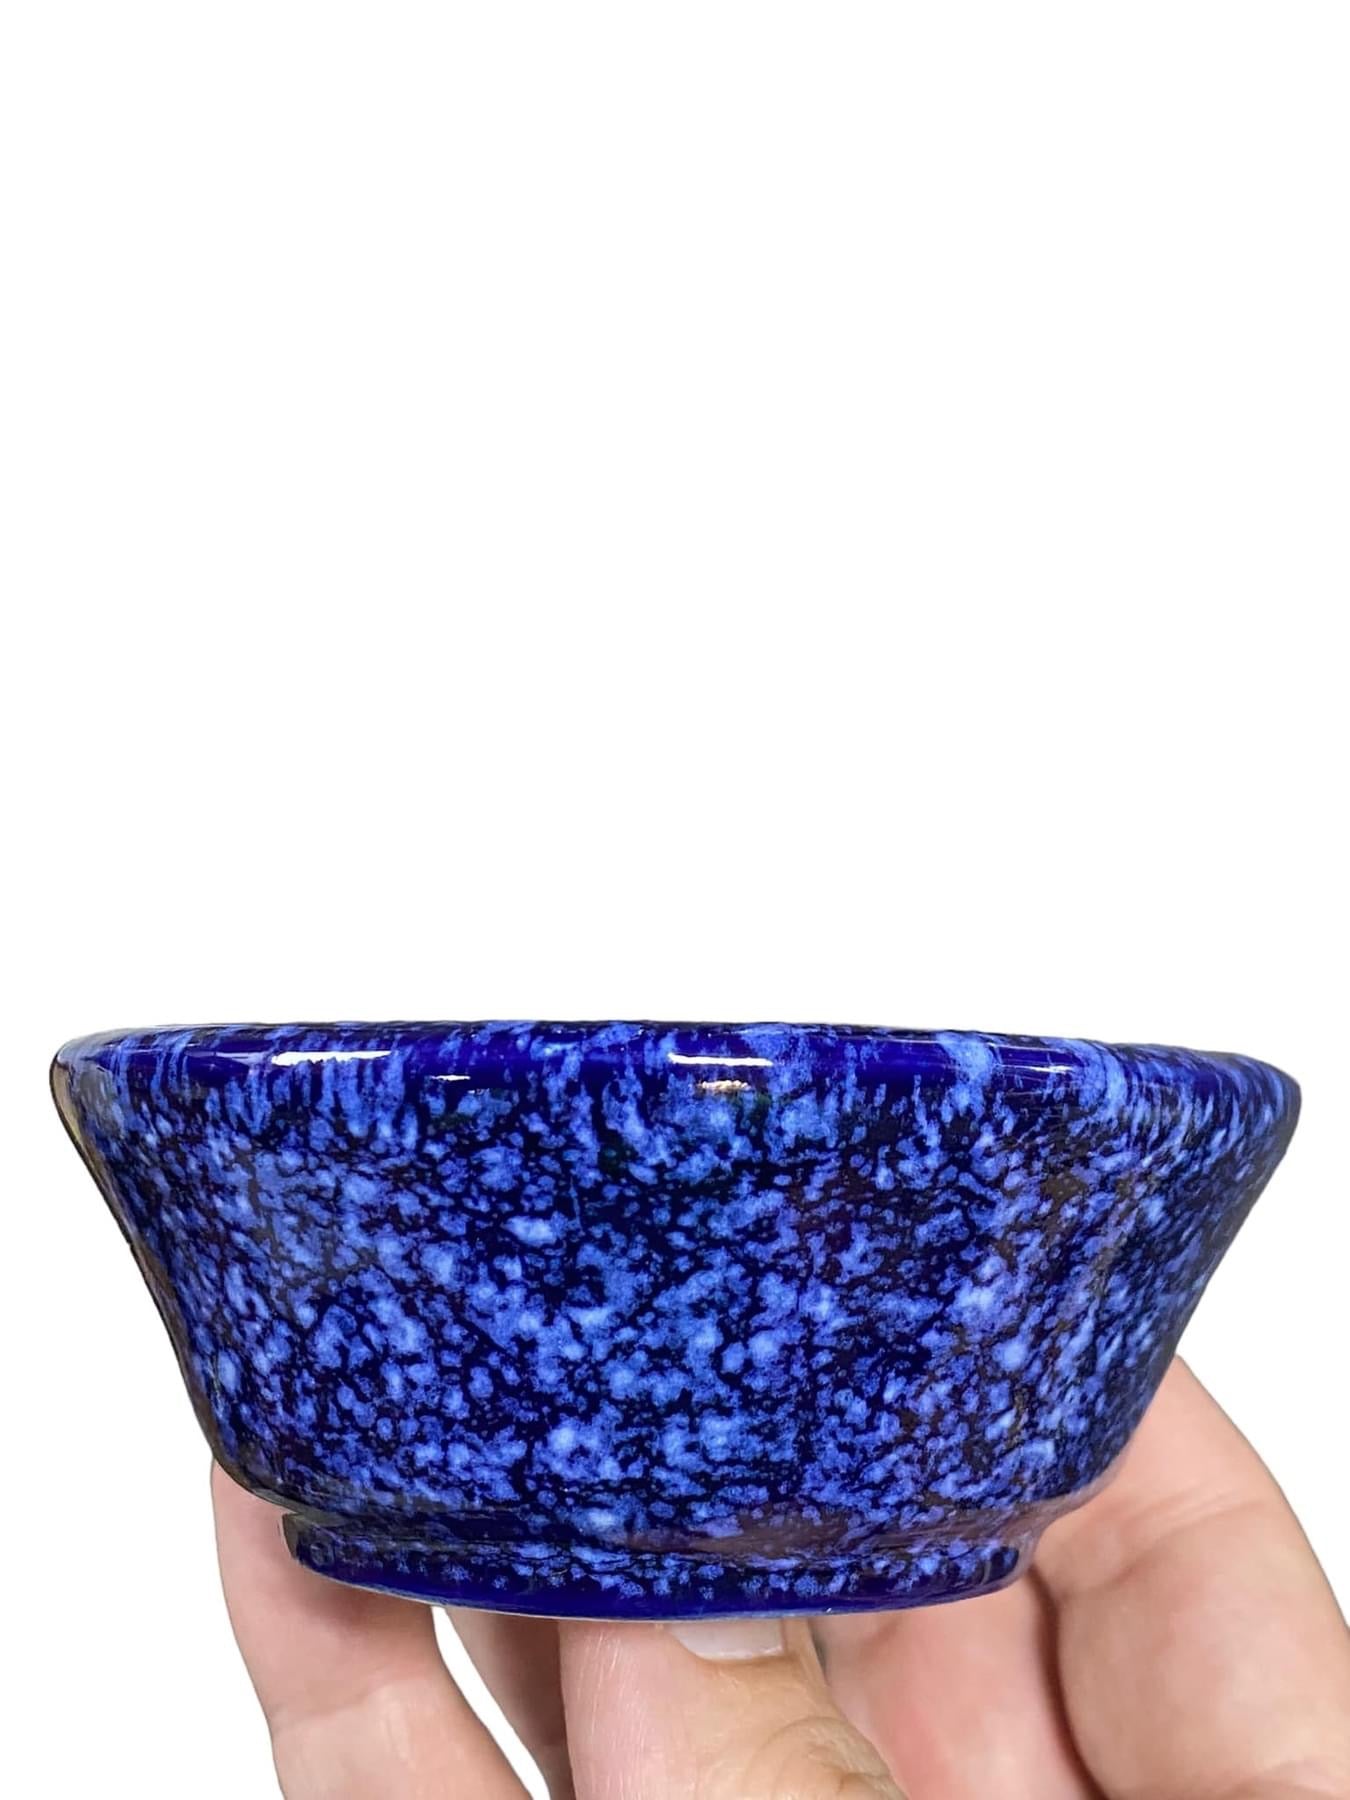 Koyo - Namako Blue Glazed Oval Bonsai Pot